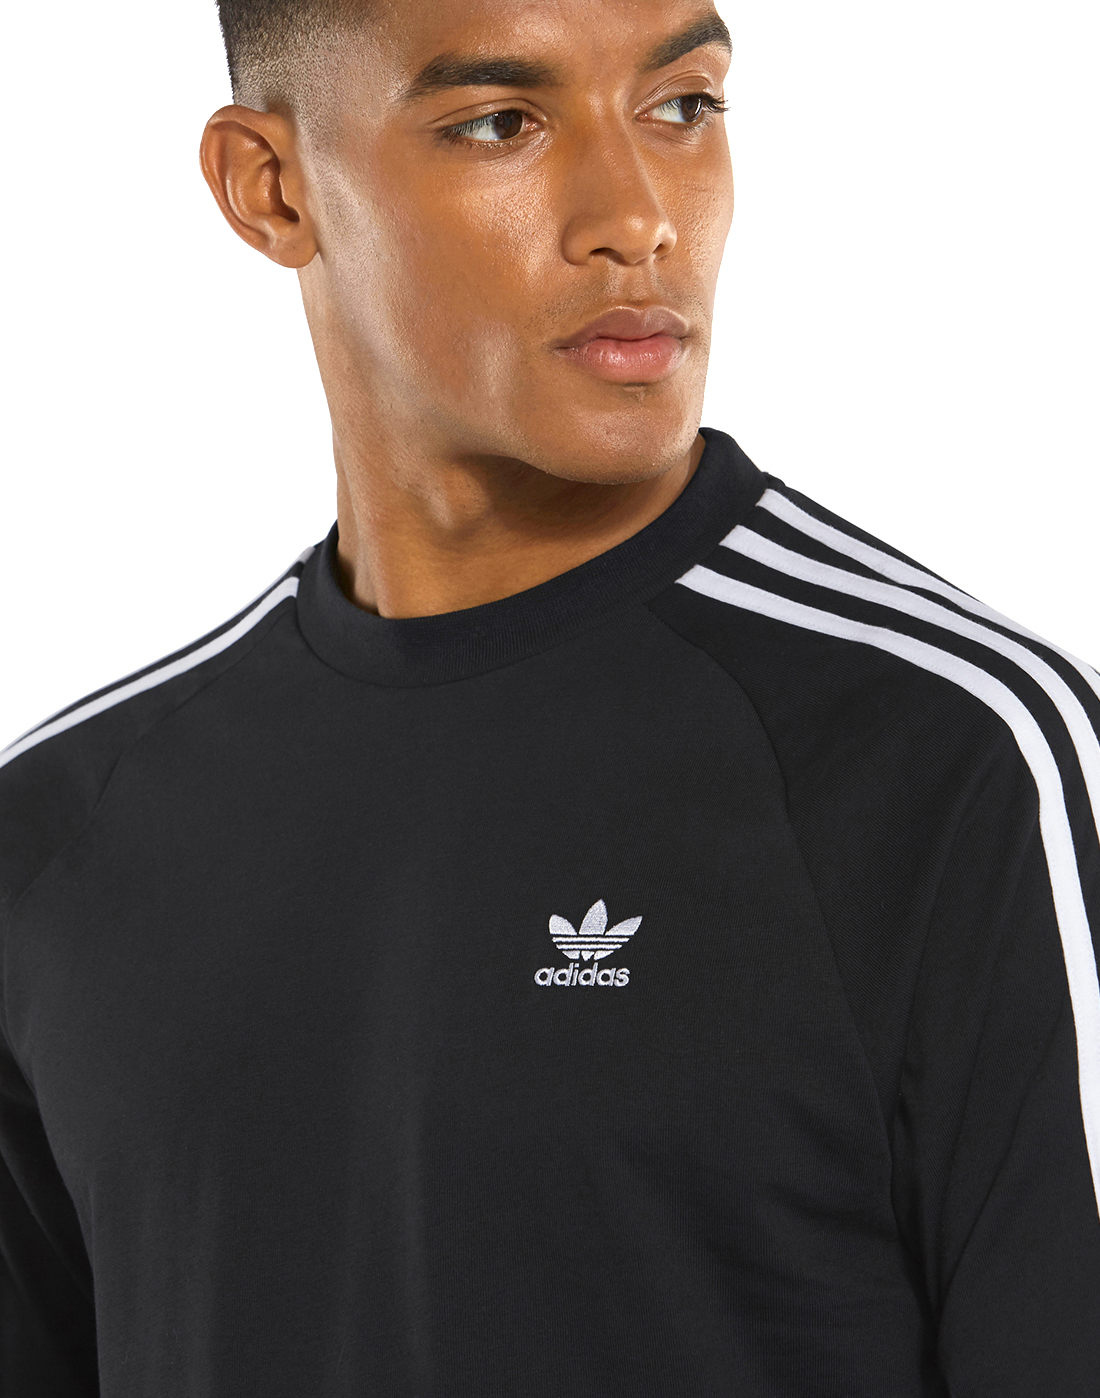 Men's Black adidas Originals Long Sleeve T-Shirt | Life Style Sports